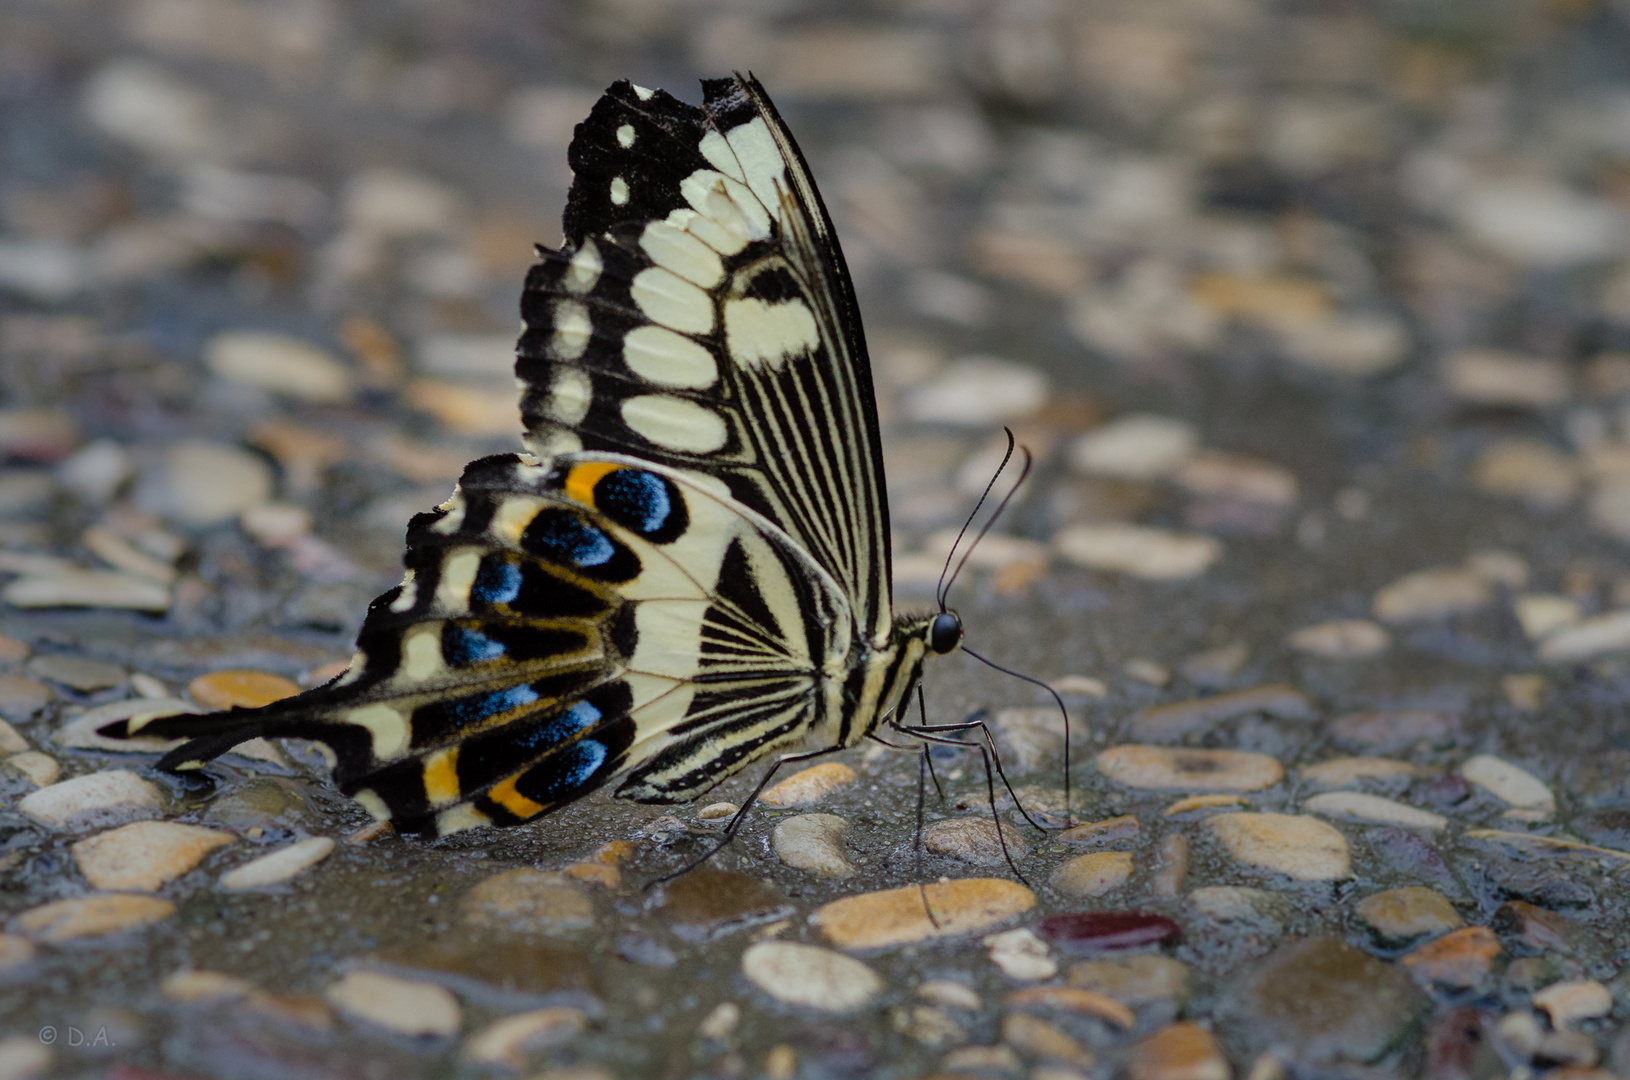 Gaukler der Tropen - Schmetterlinge im Berggarten Hannover